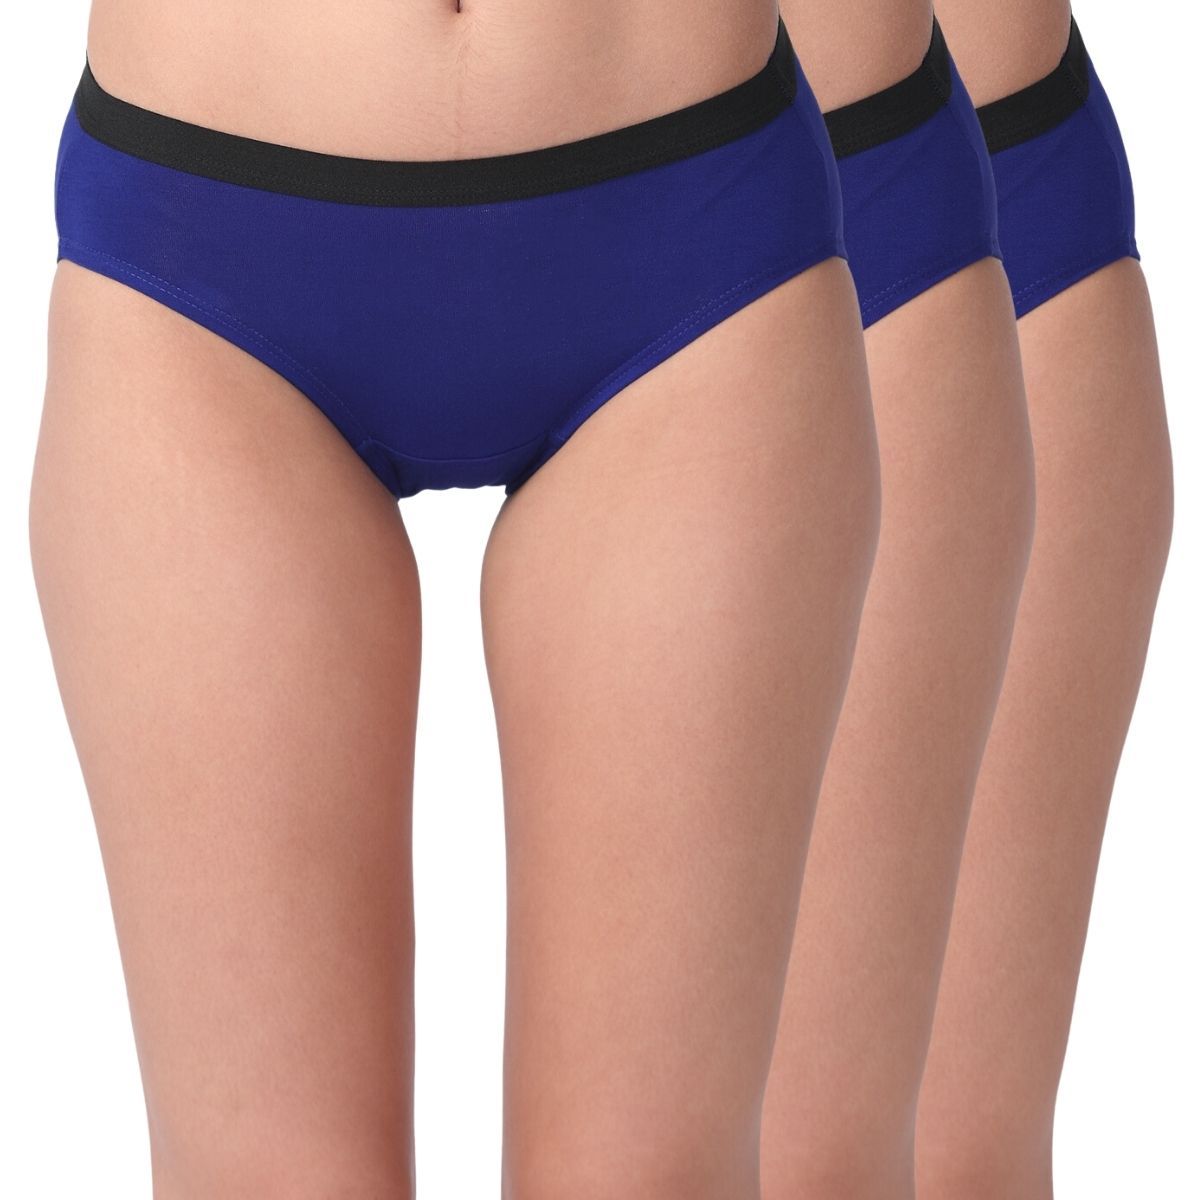 Buy Adira Modal Cotton Panties Womens Underwear Super Soft Cotton - Pack Of  3 - Blue online